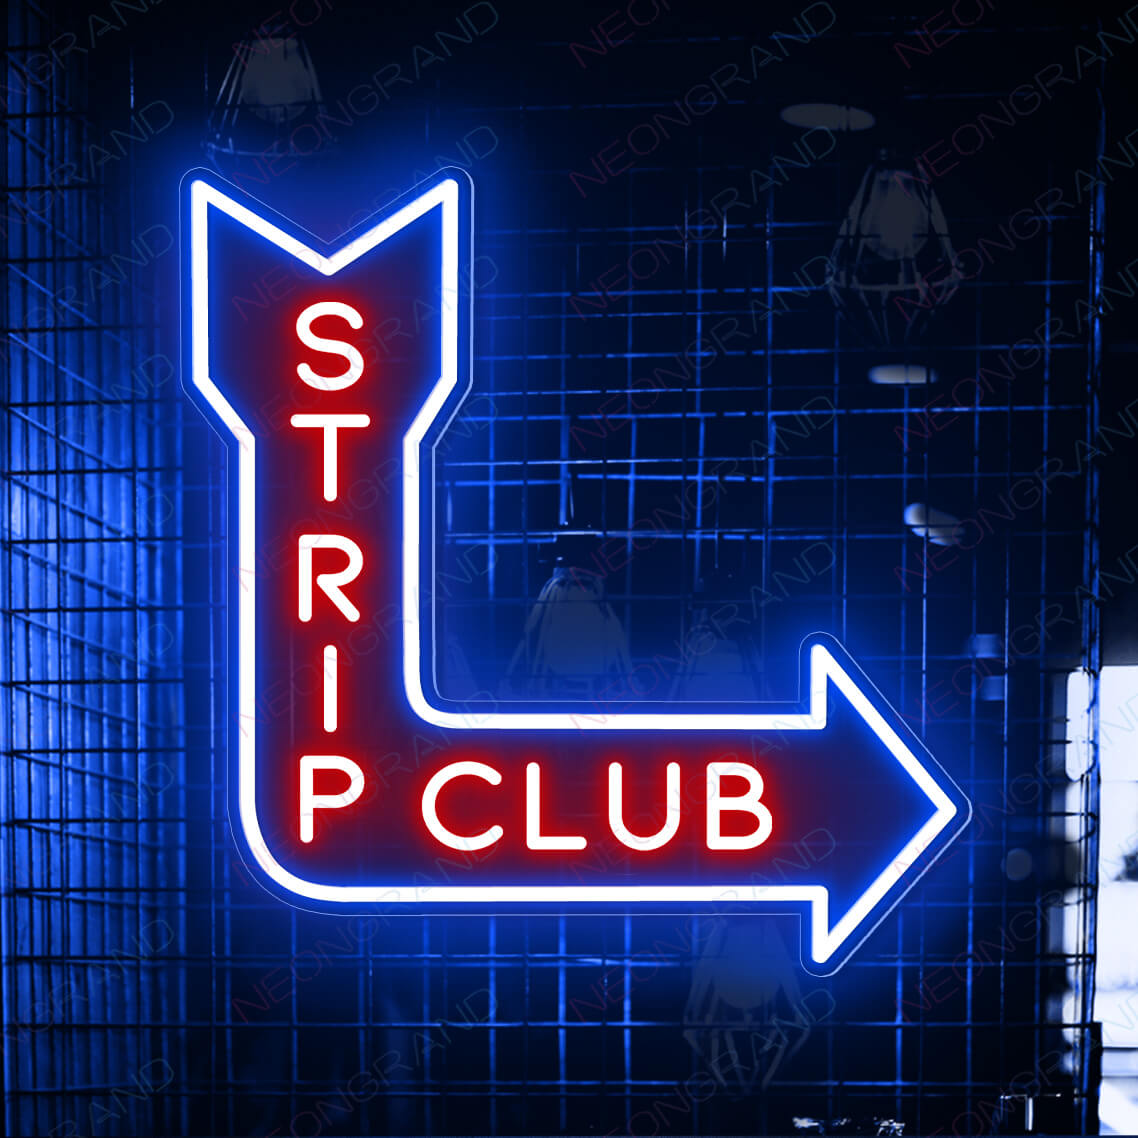 Strip Club Neon Sign Bar Led Light blue